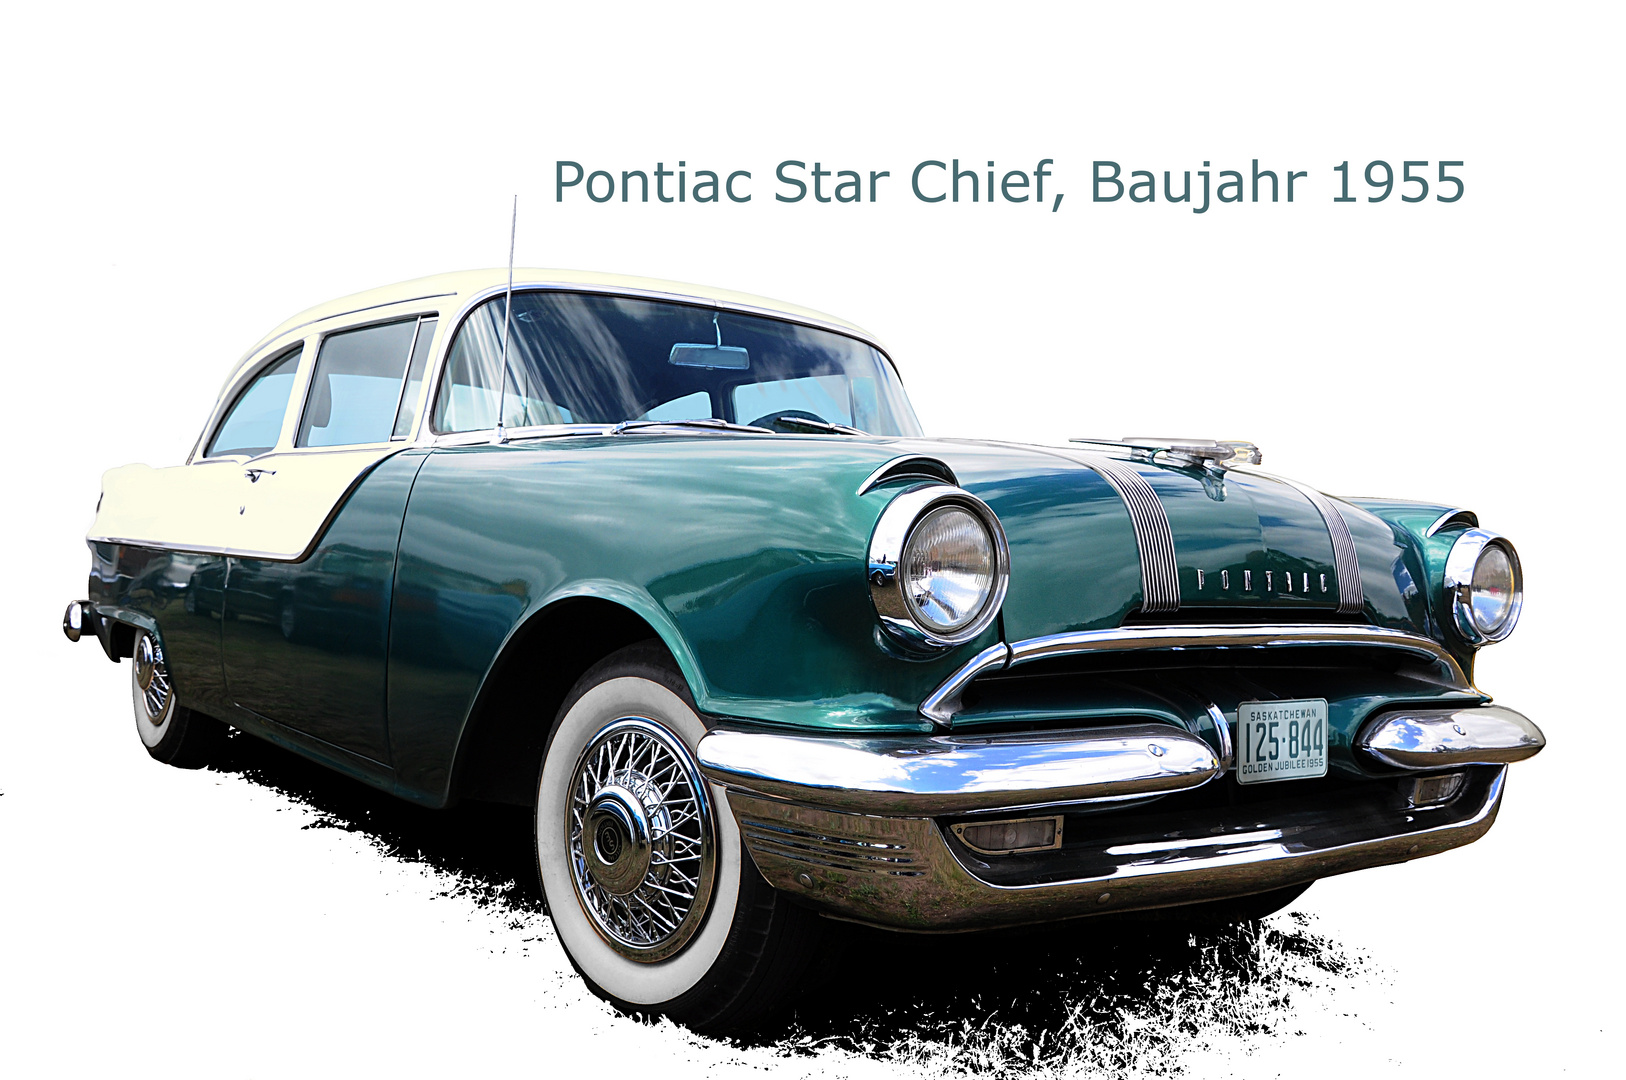 Pontiac Star Chief